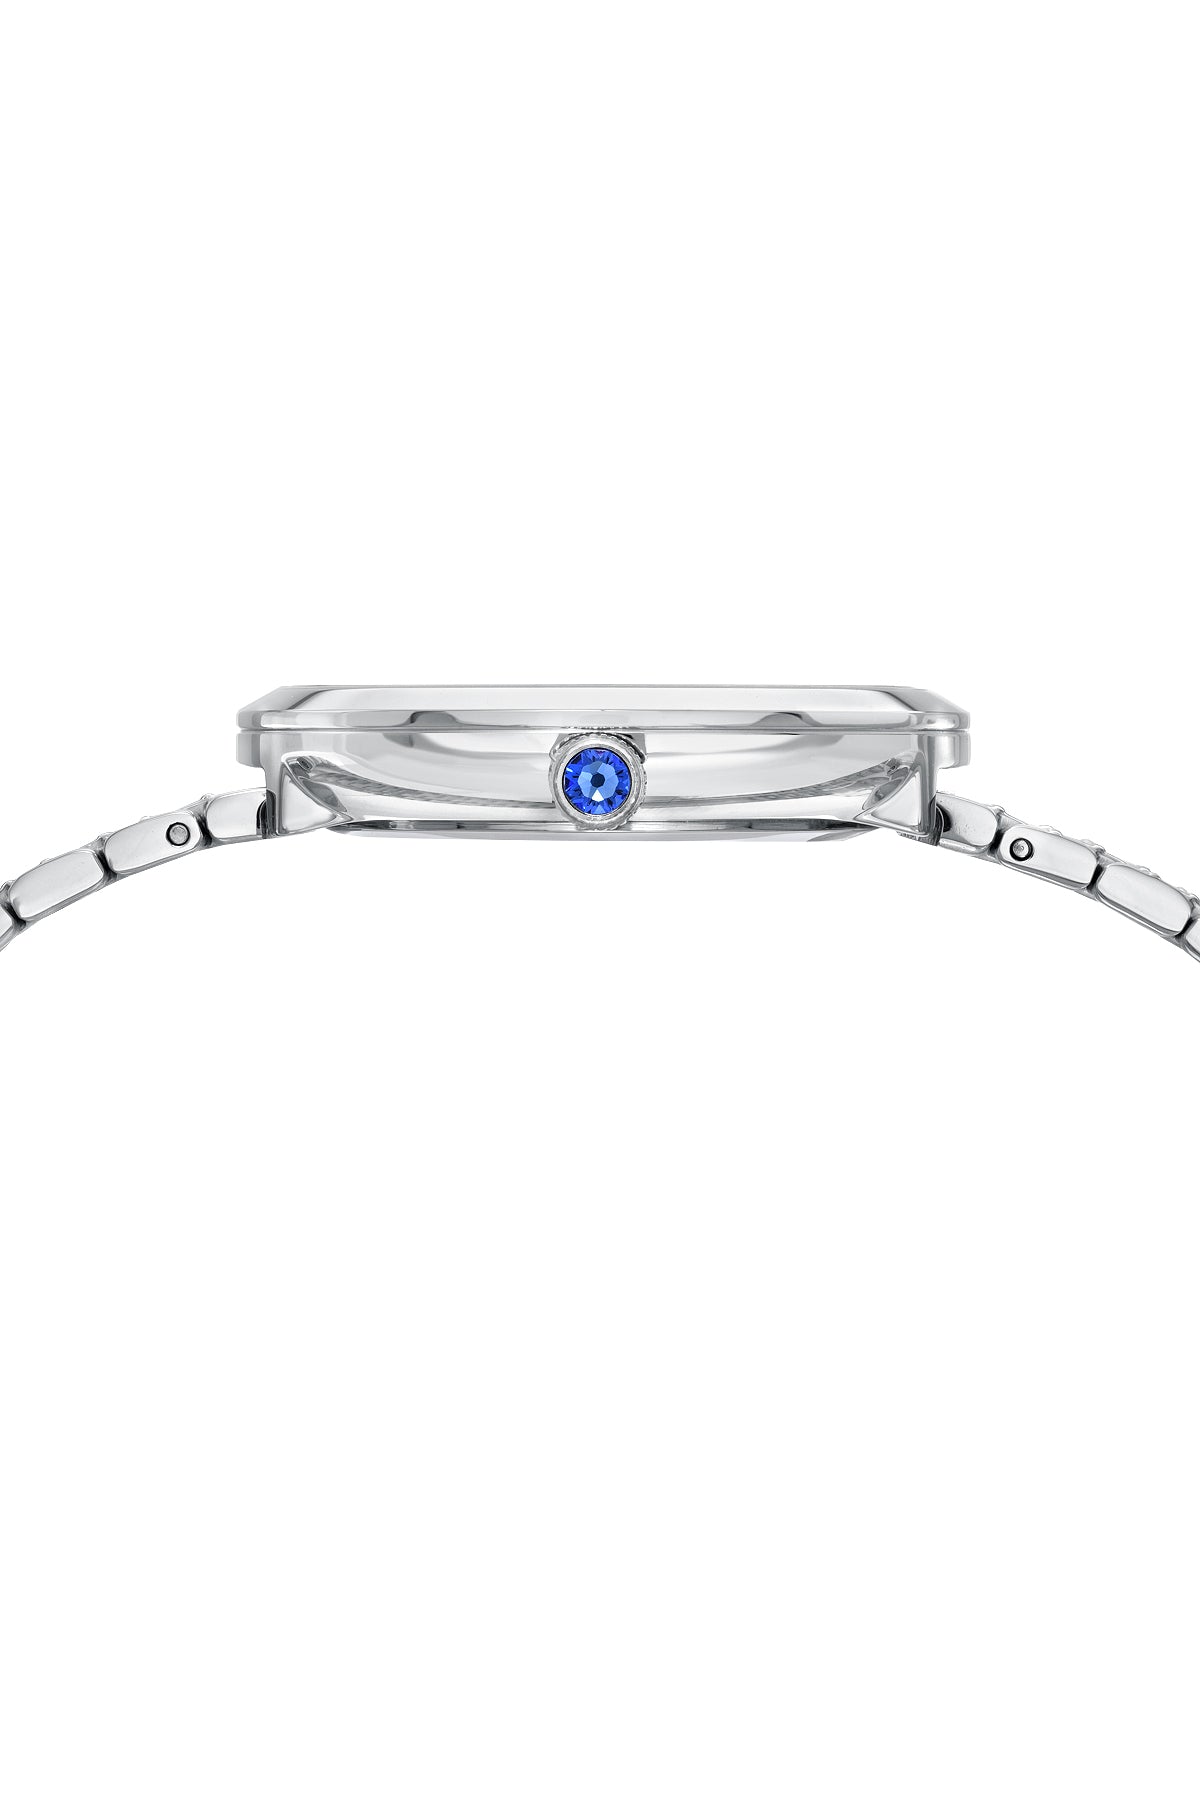 Porsamo Bleu Priscilla Luxury  Women's Stainless Steel Watch, Silver, Blue 932APRS